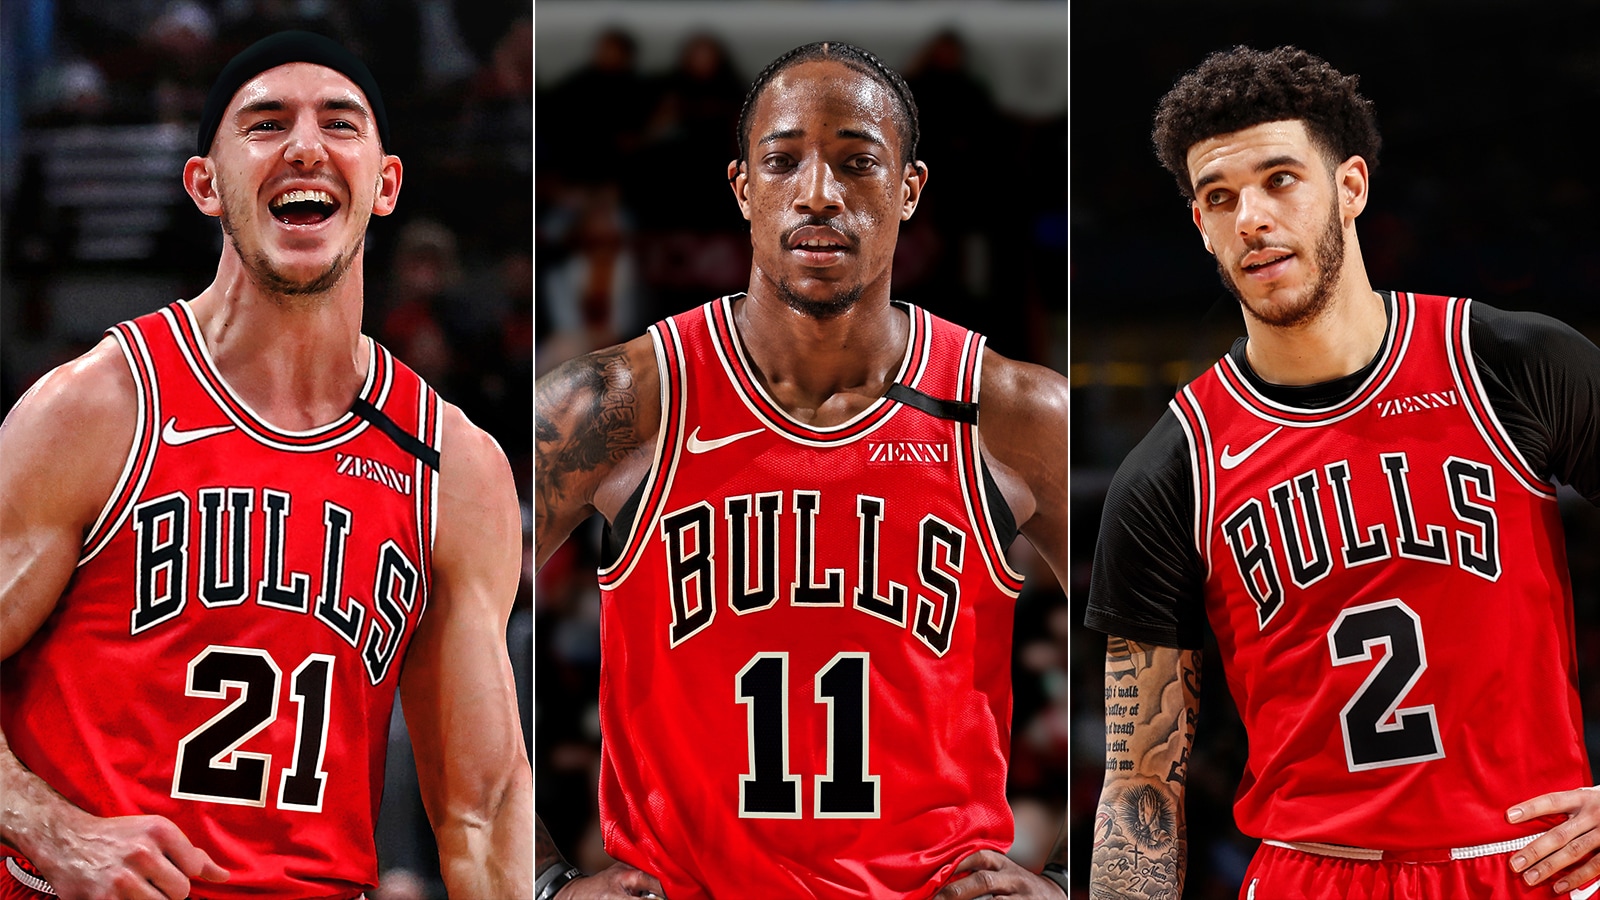 A new era of Bulls basketball: DeMar DeRozan, Lonzo Ball, and Alex Caruso join Chicago